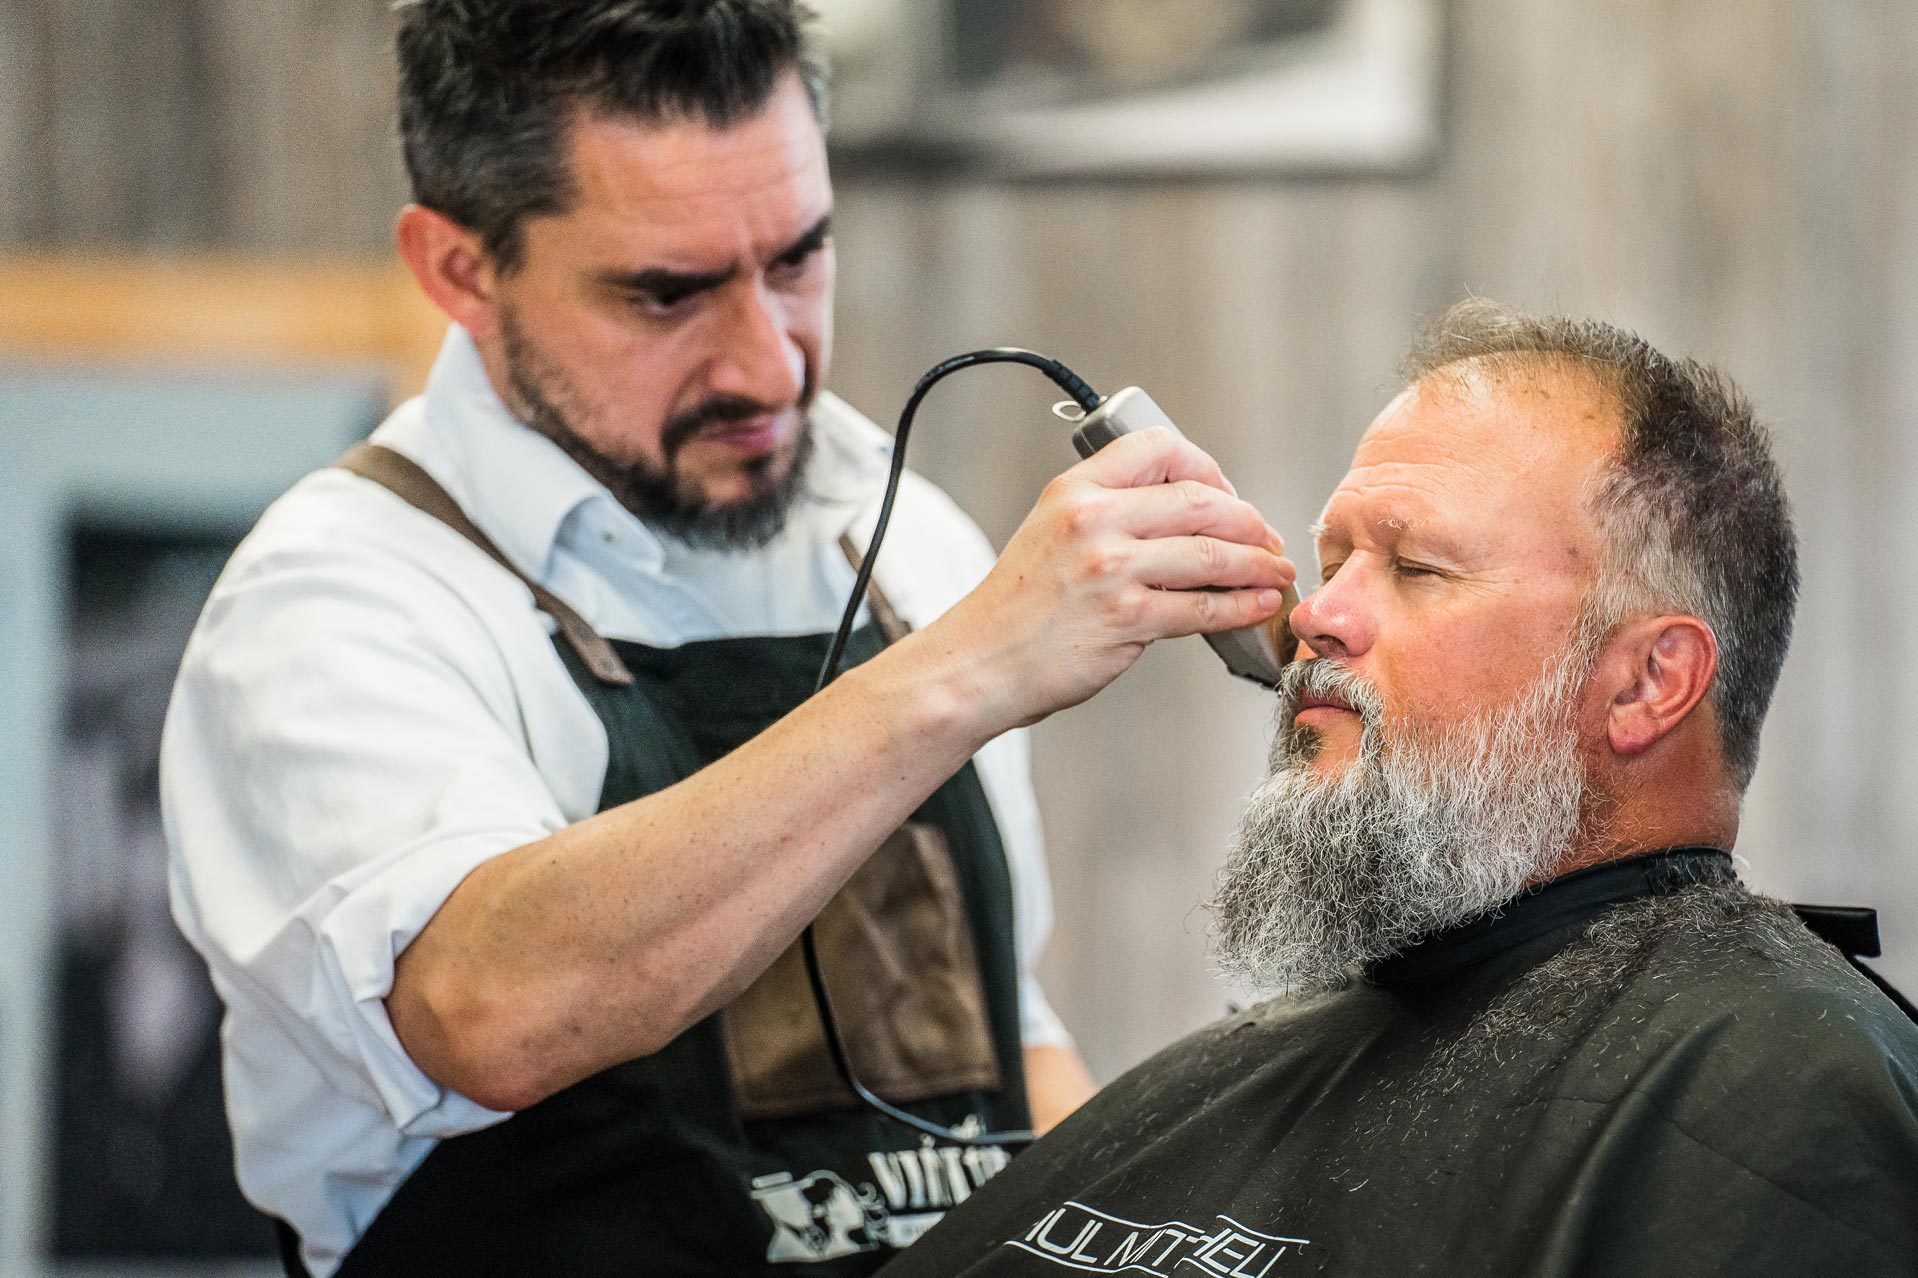 Joseph’s Vintage Barbershop & Salon - Barbershop with 50+ years in business